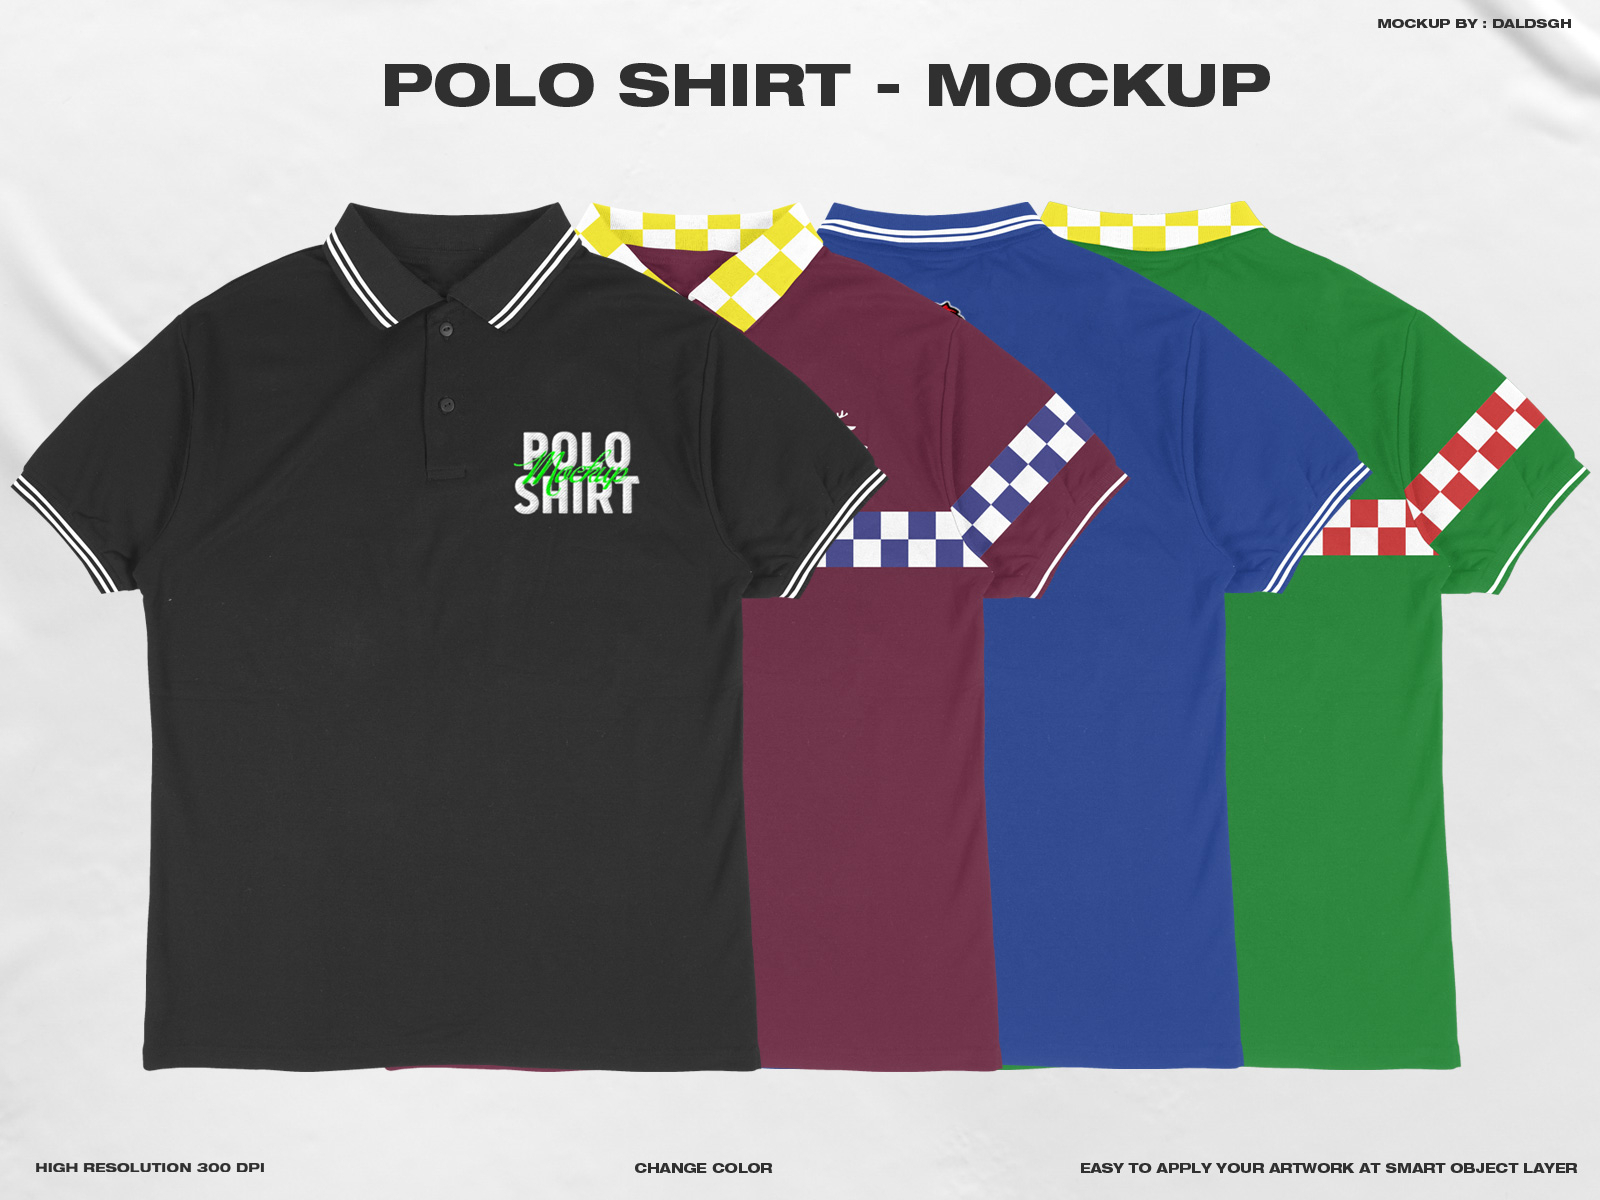 Polo Shirt - Mockup by Daldsgh on Dribbble